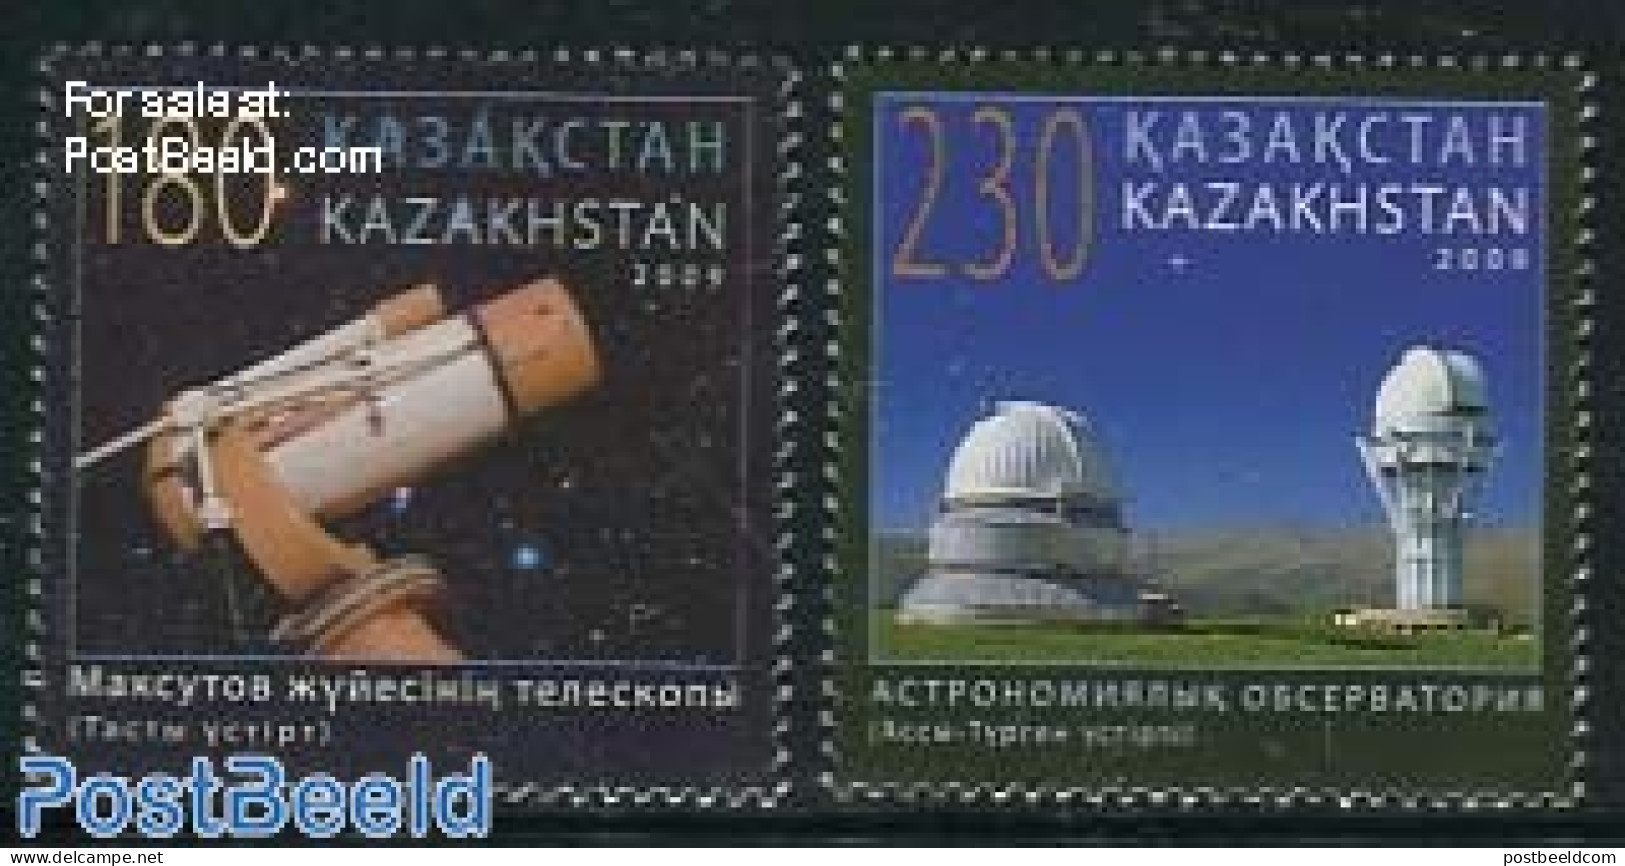 Kazakhstan 2009 Astronomy 2v, Mint NH, Science - Astronomy - Astrología